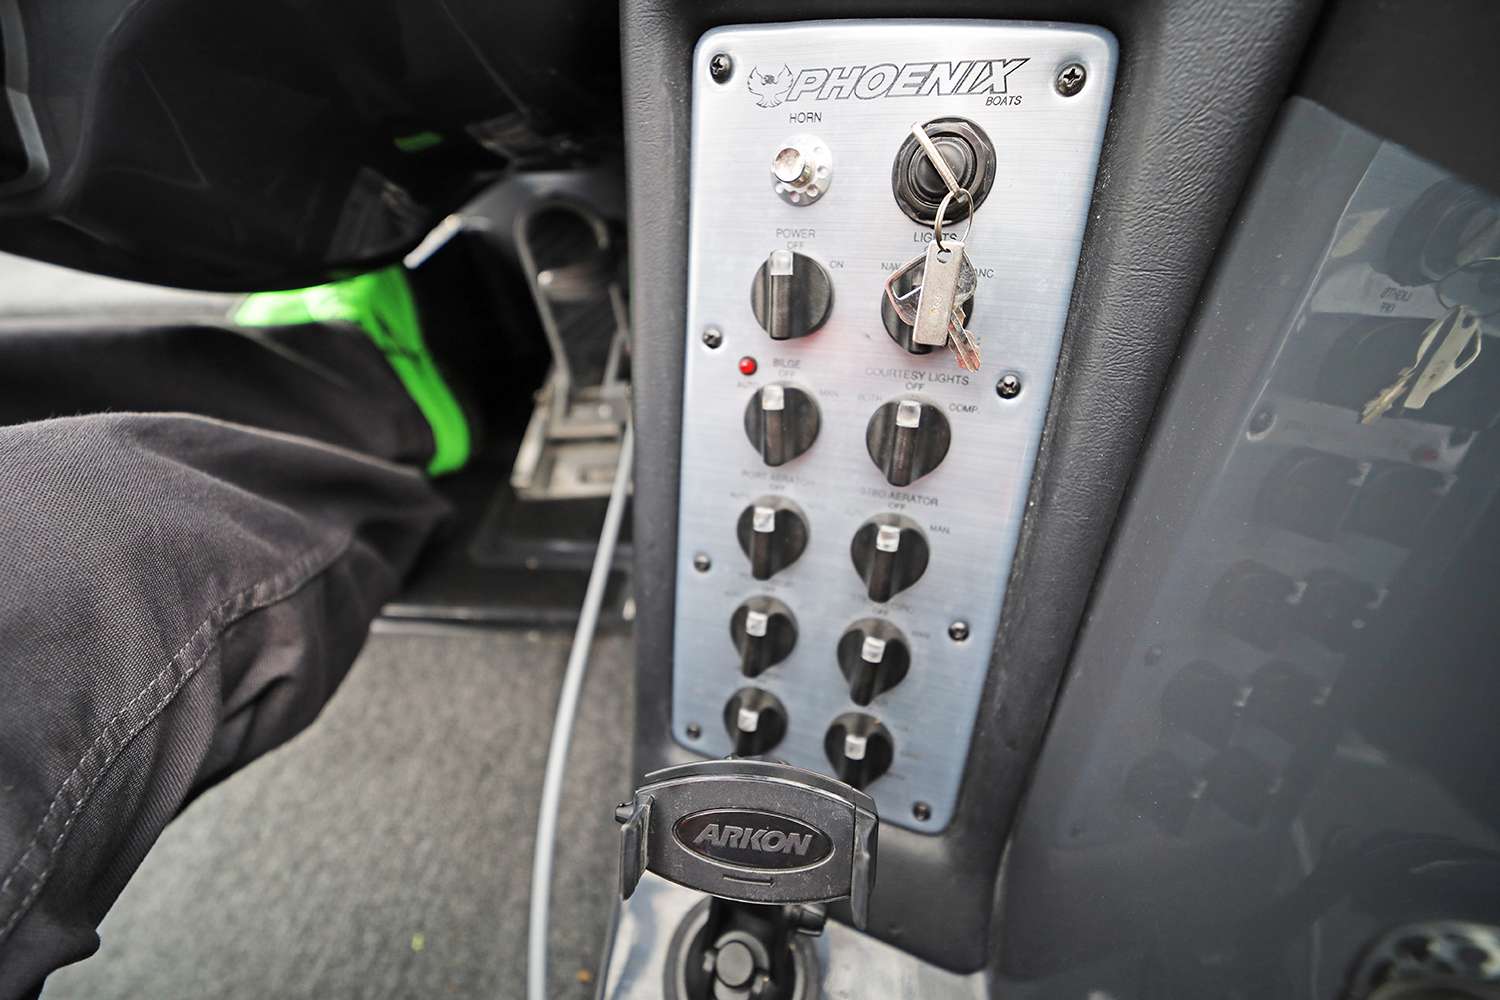 The main control panel beneath the steering wheel.